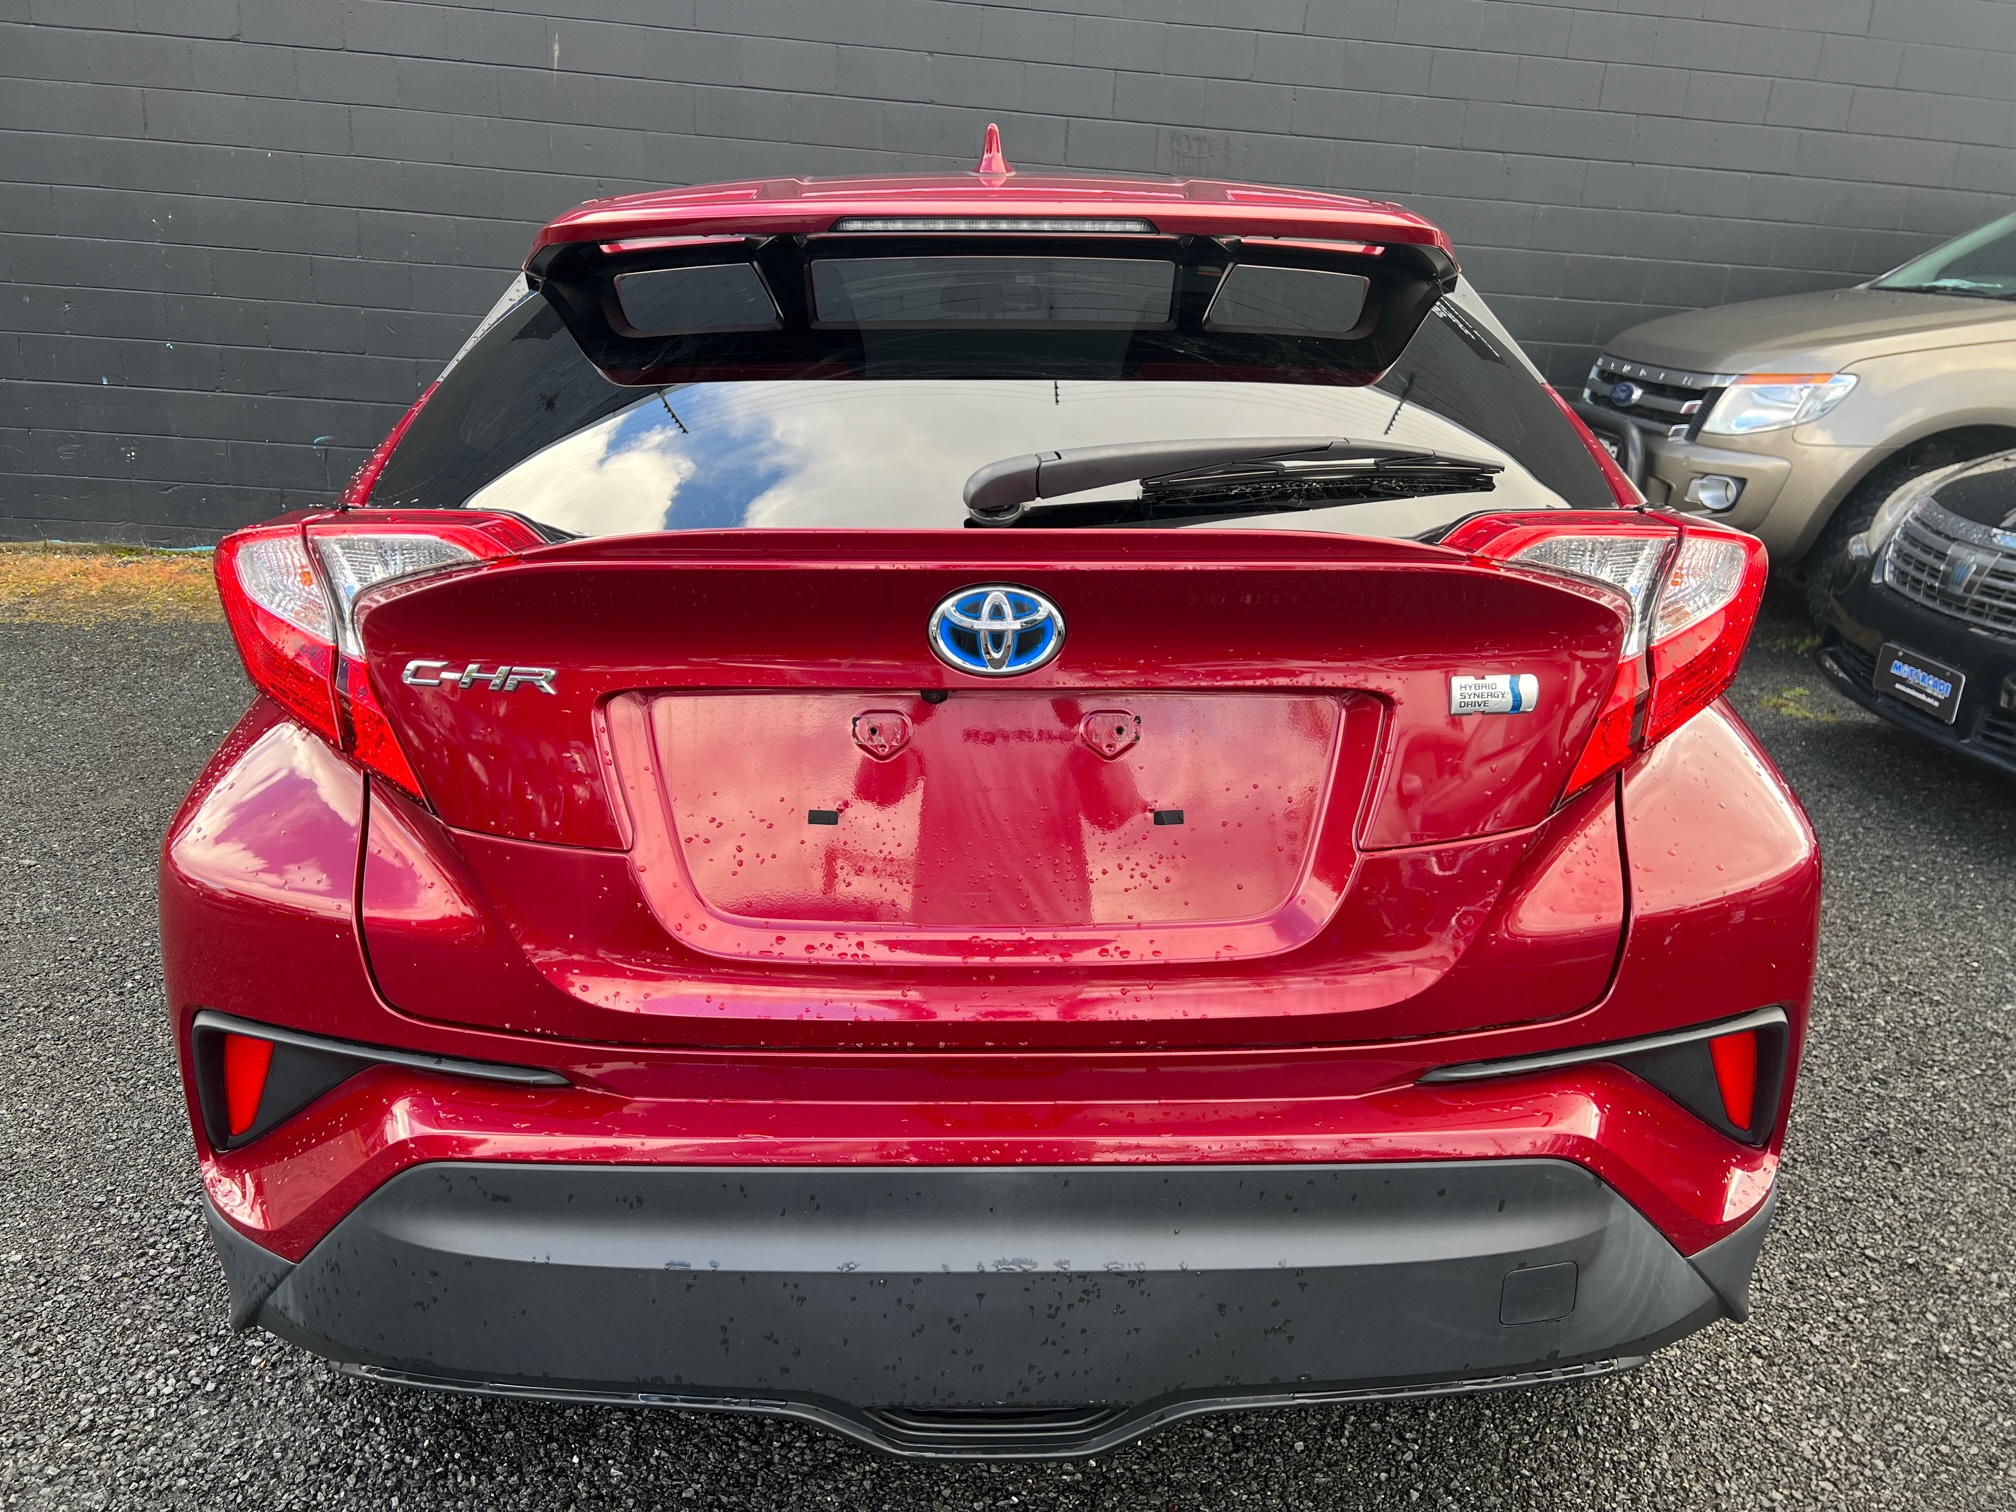 Toyota CH-R 2017 Image 4